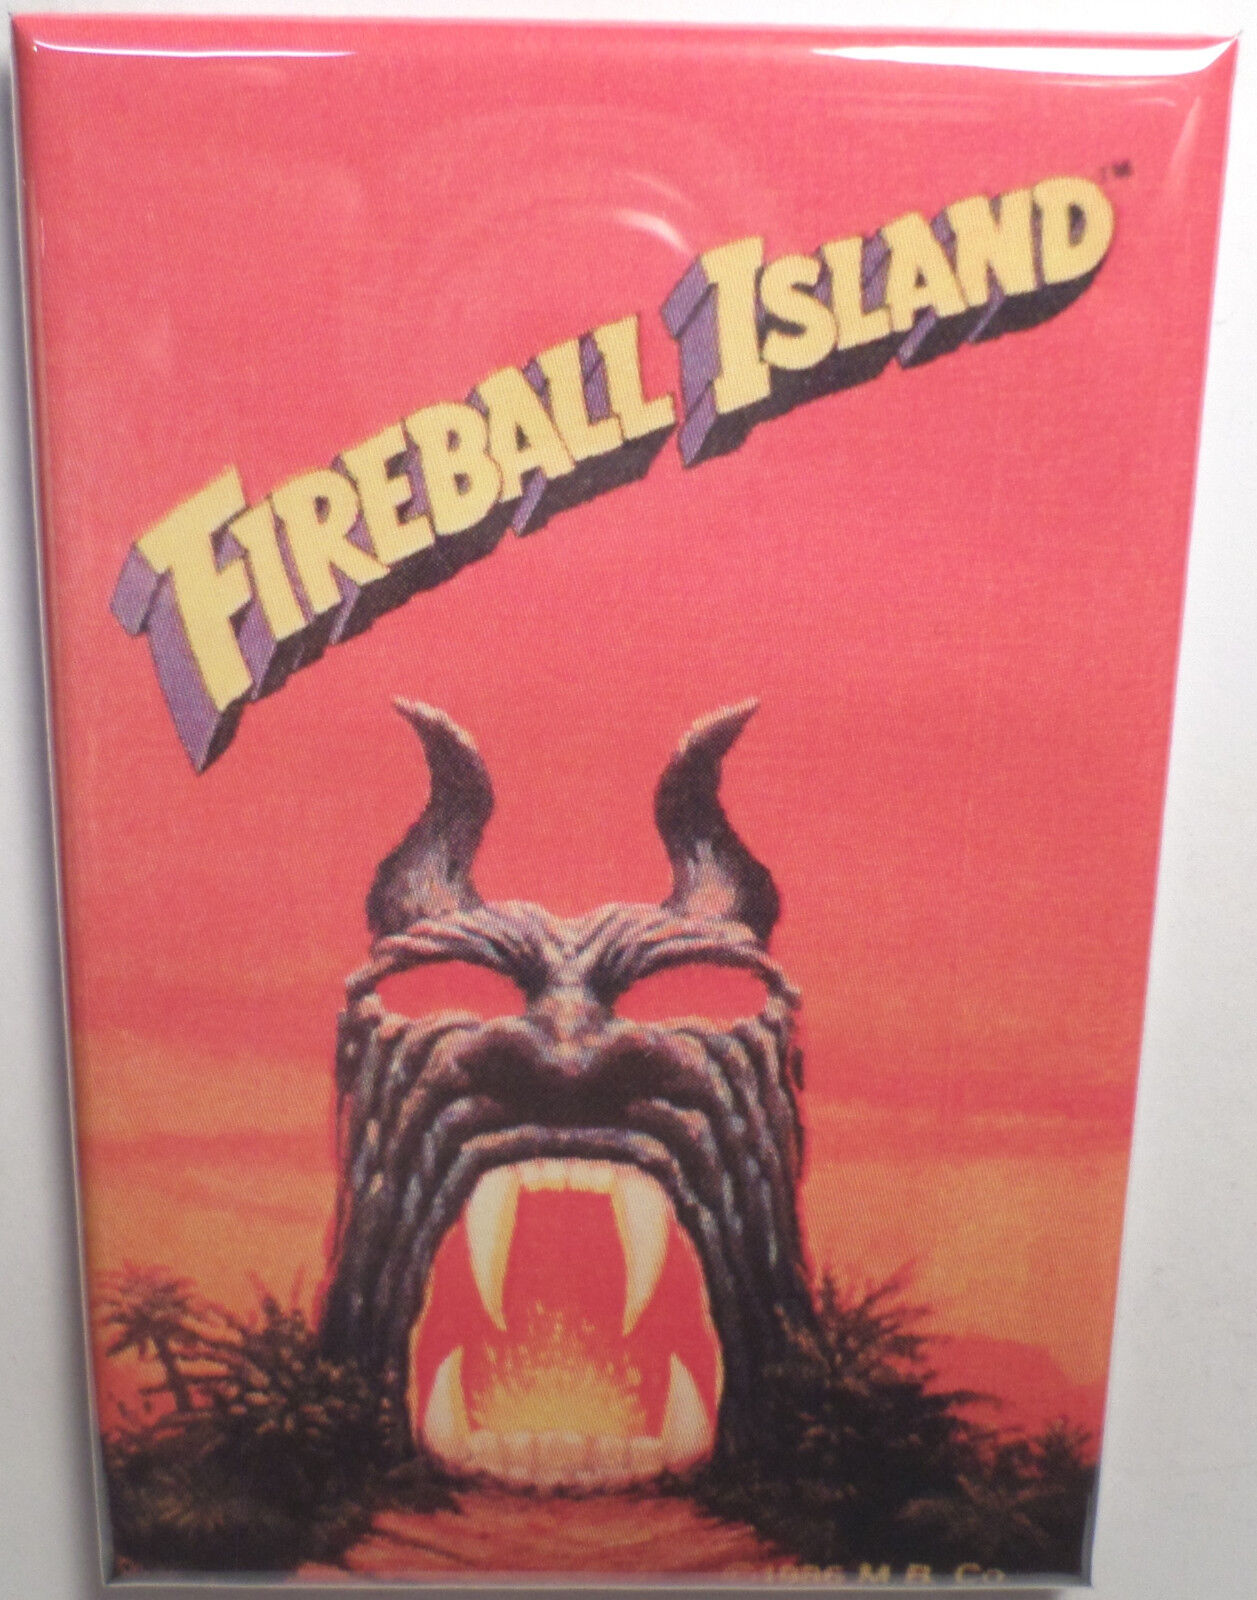 Fireball Island Board Game Box 2